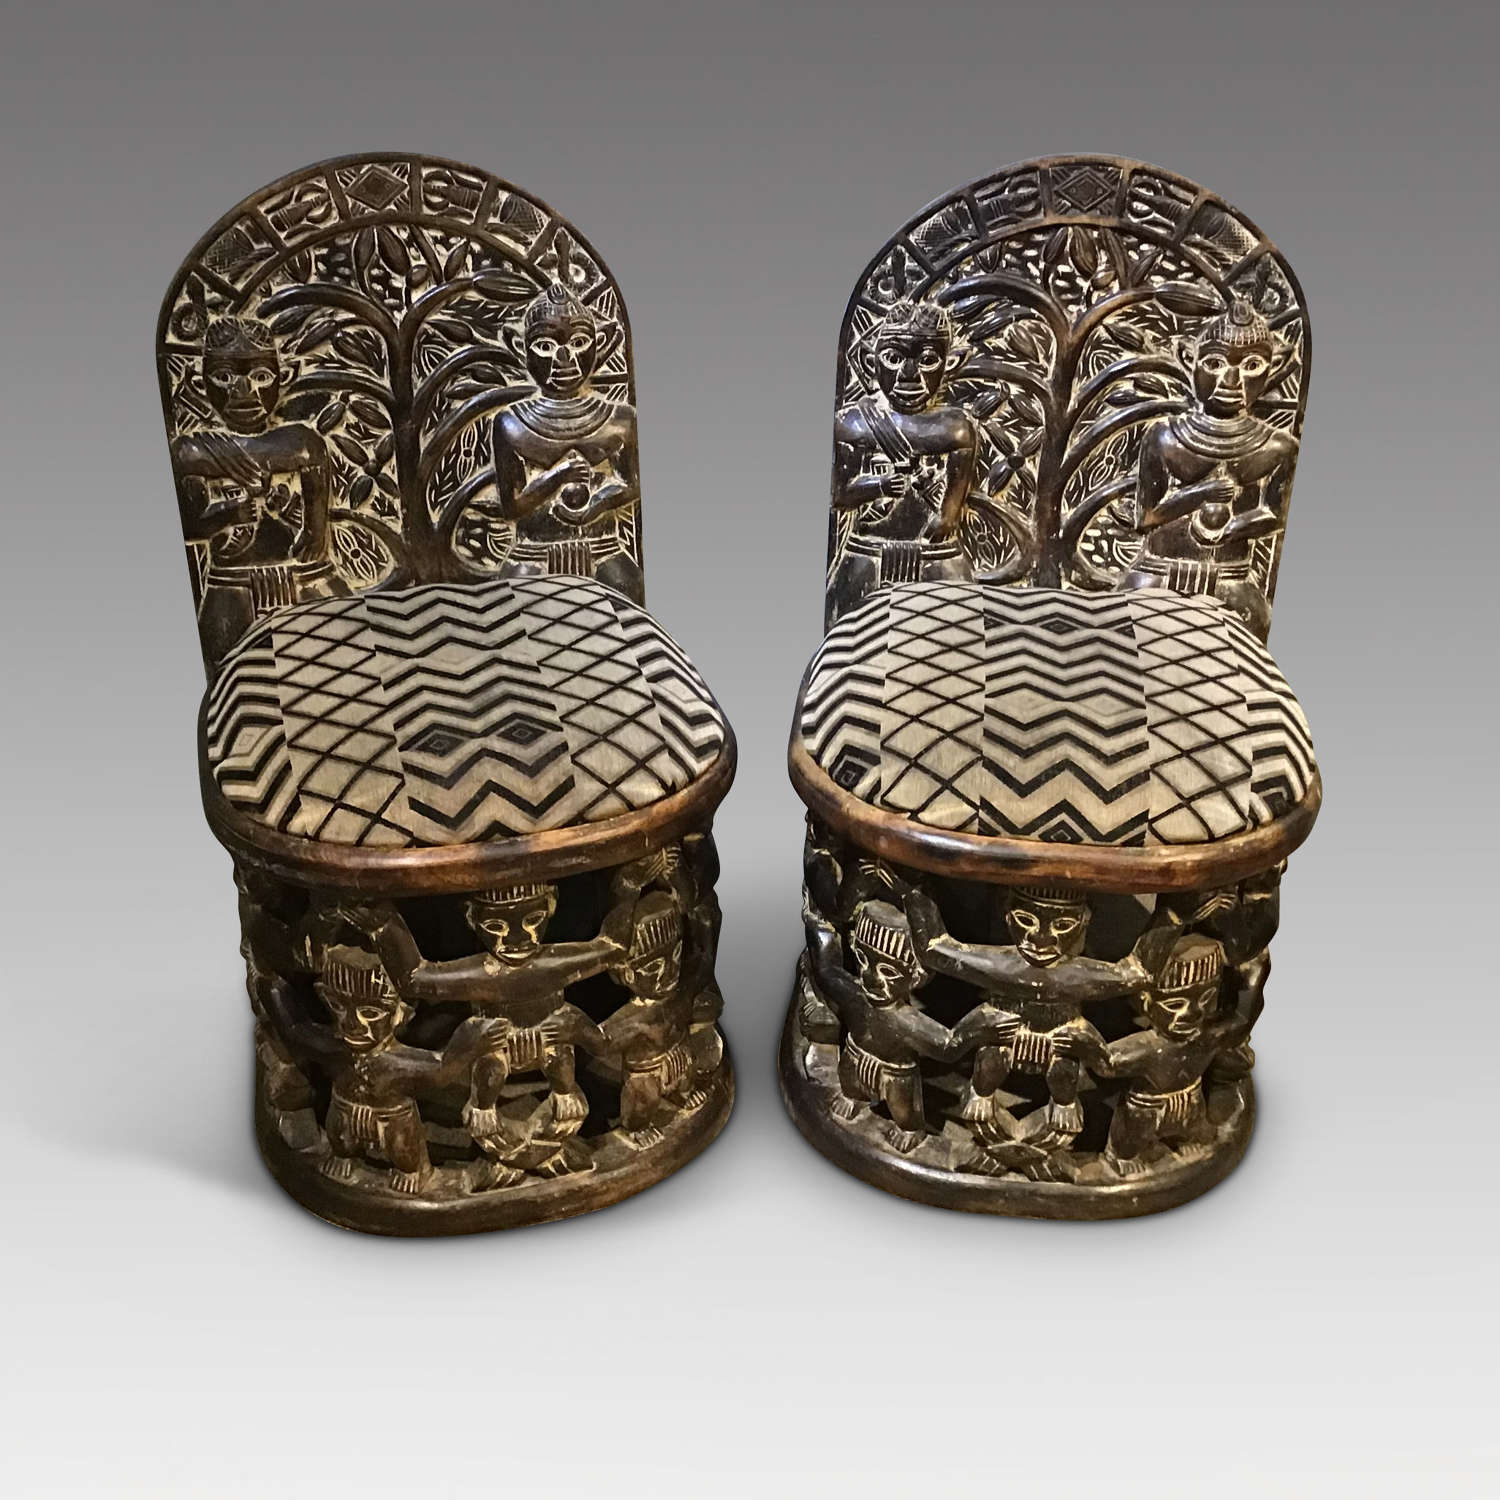 Pair of tribal sidechairs